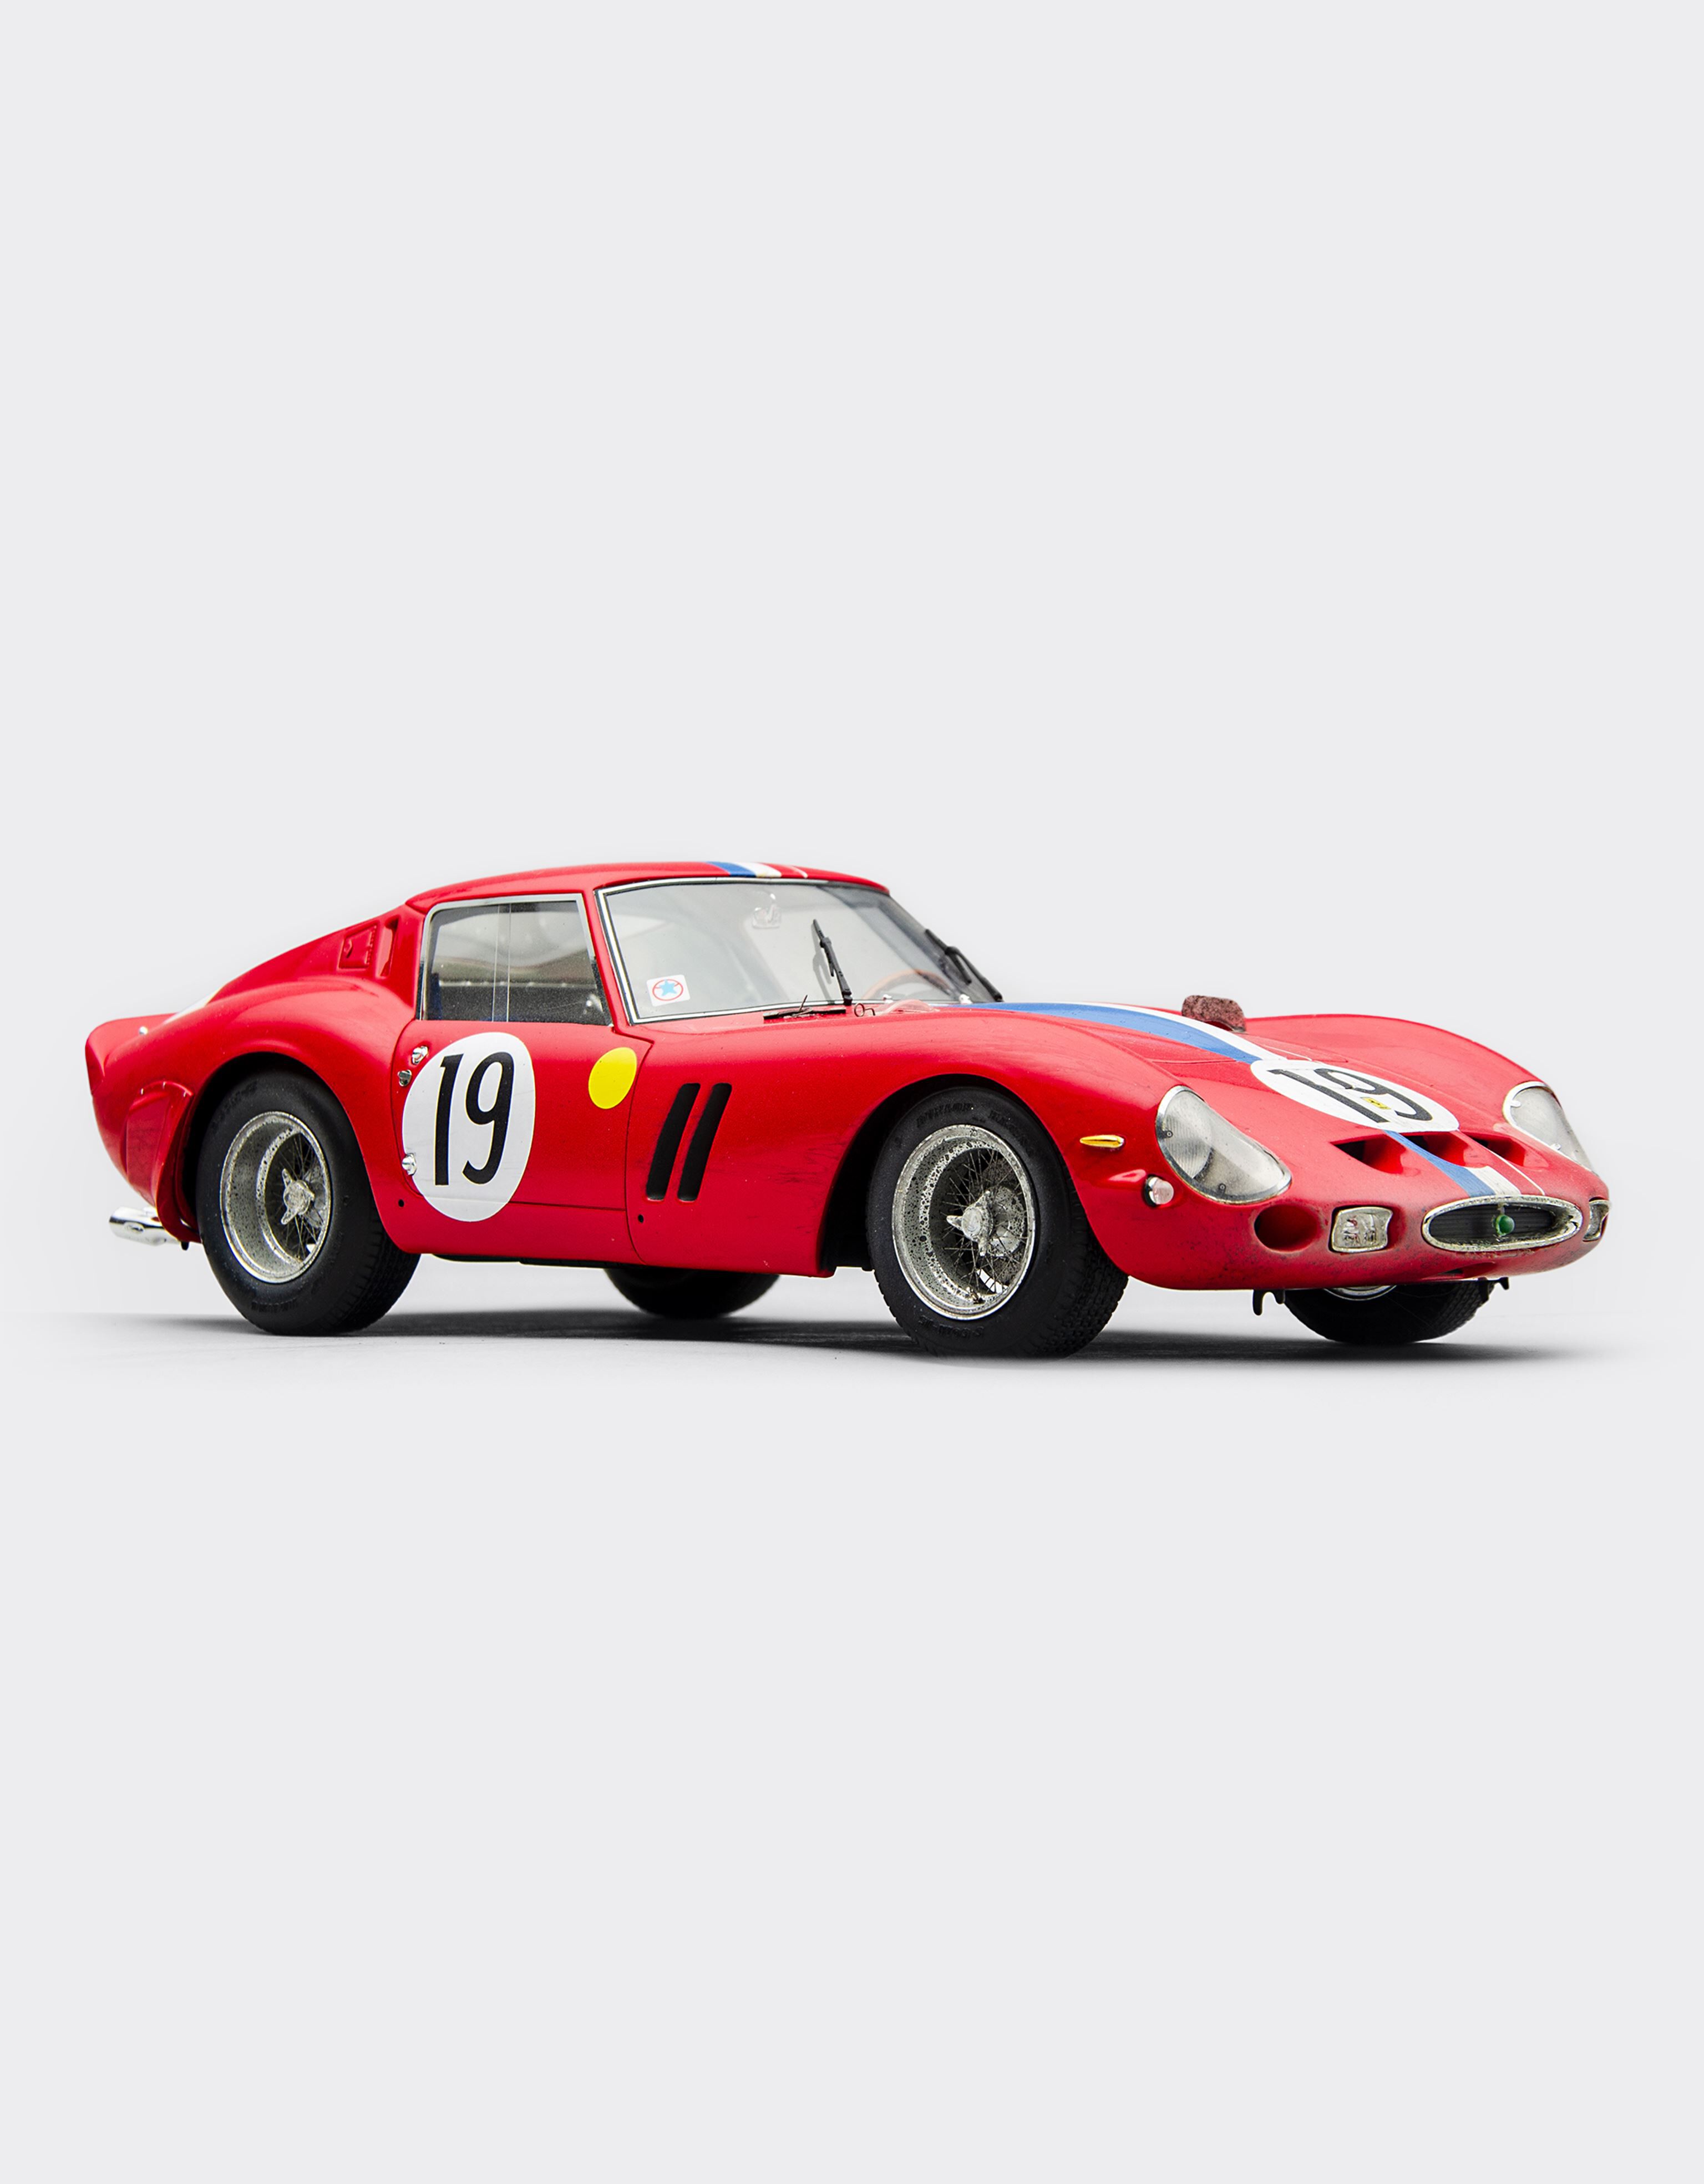 ${brand} Ferrari 250 GTO 1962 “Race weathered” Le Mans in 1:18 scale ${colorDescription} ${masterID}